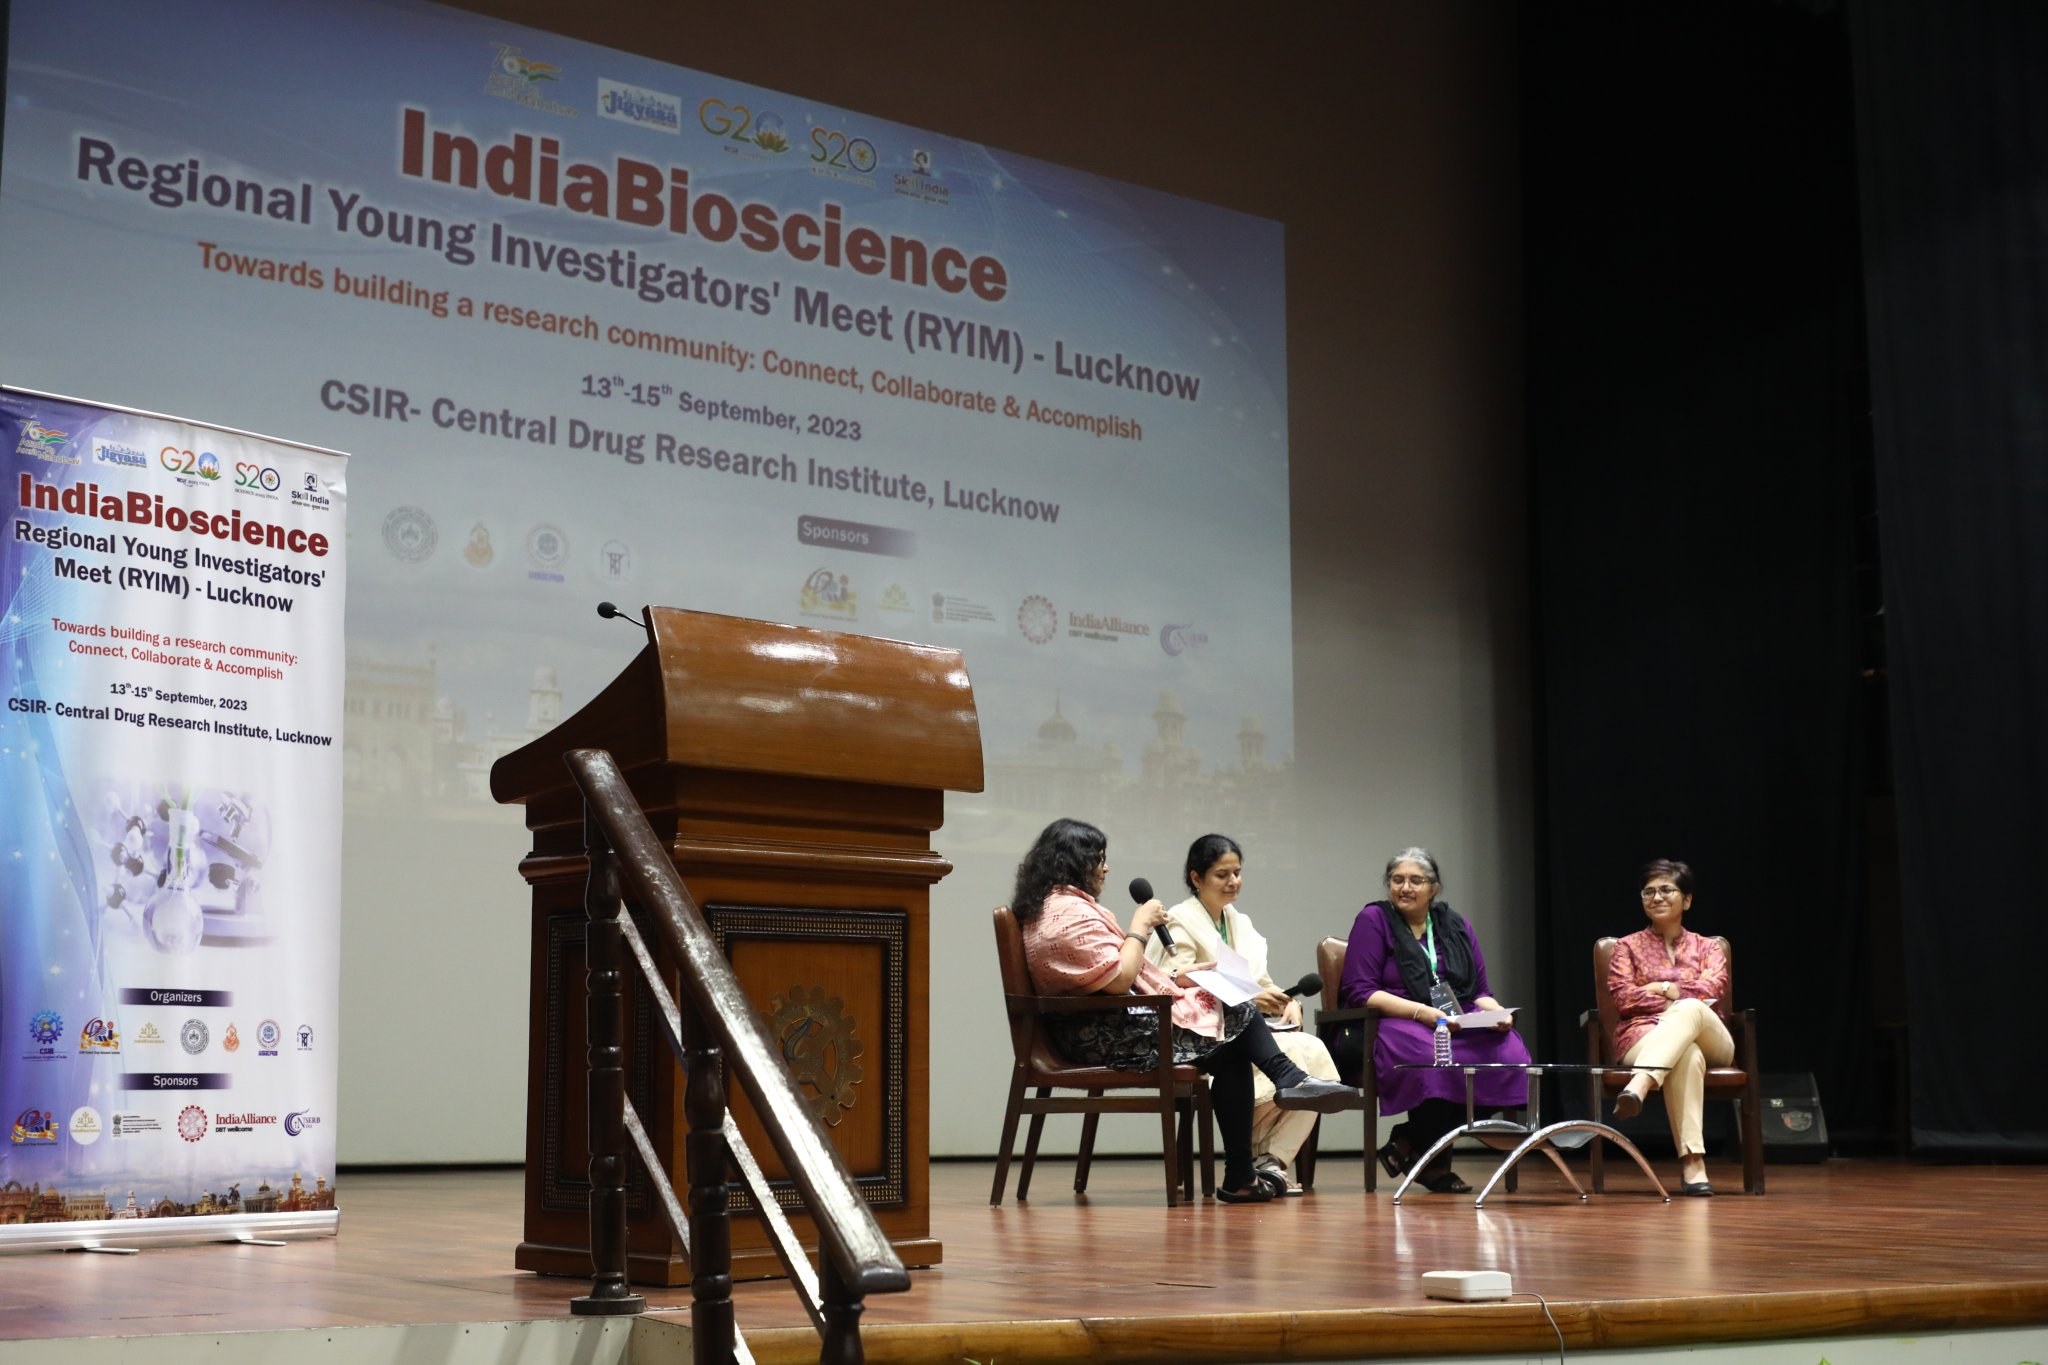 Women-led STEM panel discussion featuring Anindita Bhadra, Saman Habib, Sandhya Koushika and Niti Kumar (from left to right). Credit: RYIM organising team.